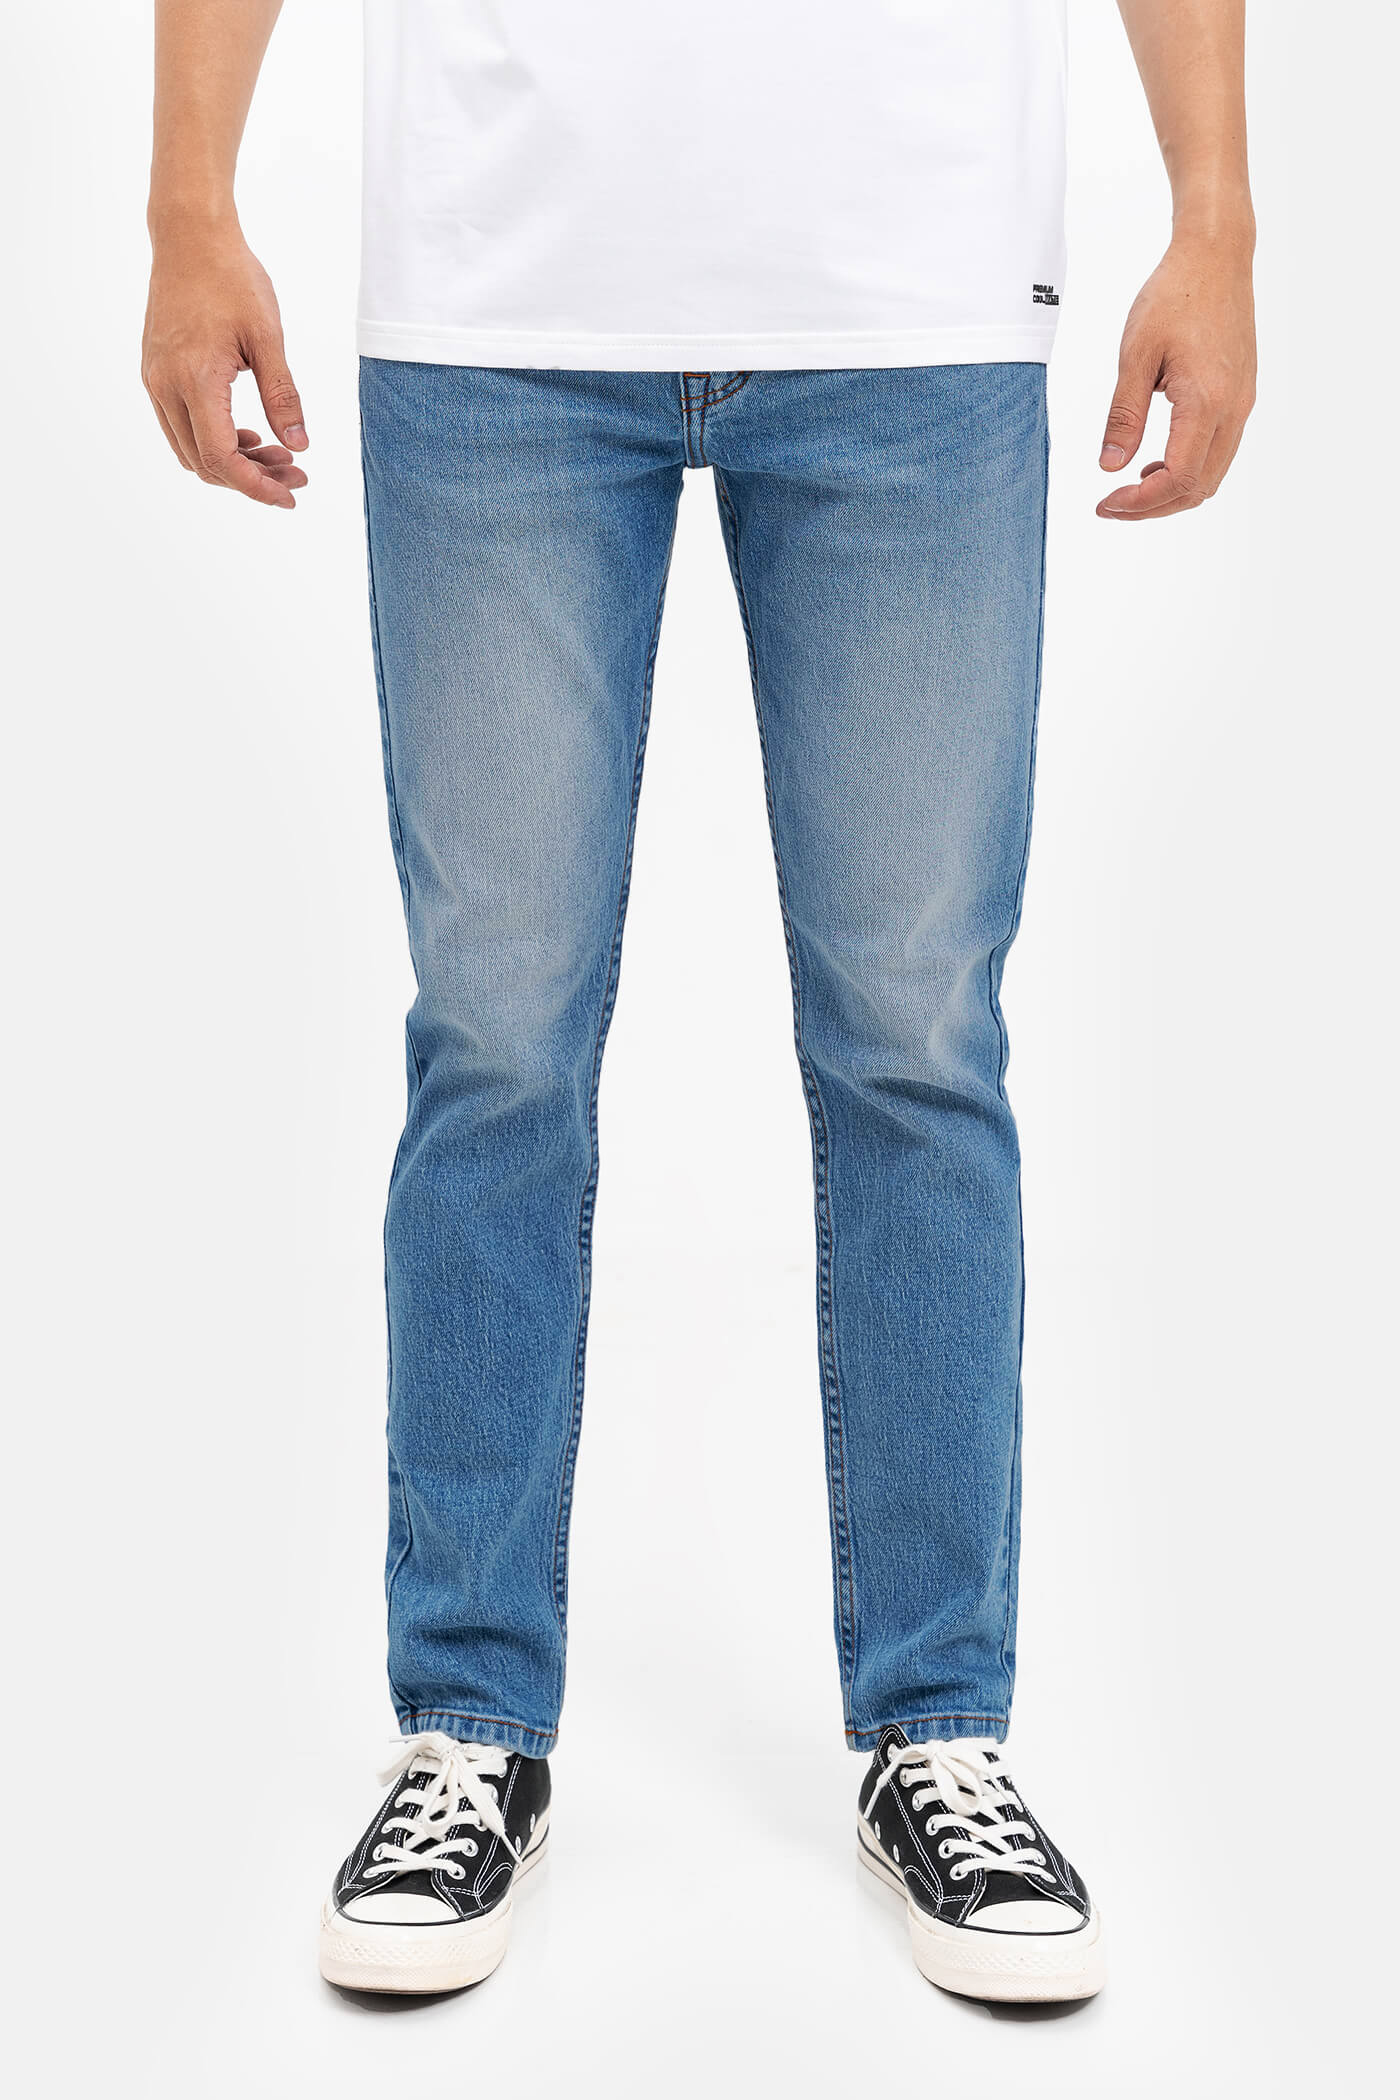 Today's Deal - Quần Jeans Clean Denim dáng Slimfit  S3 Xanh nhạt 2